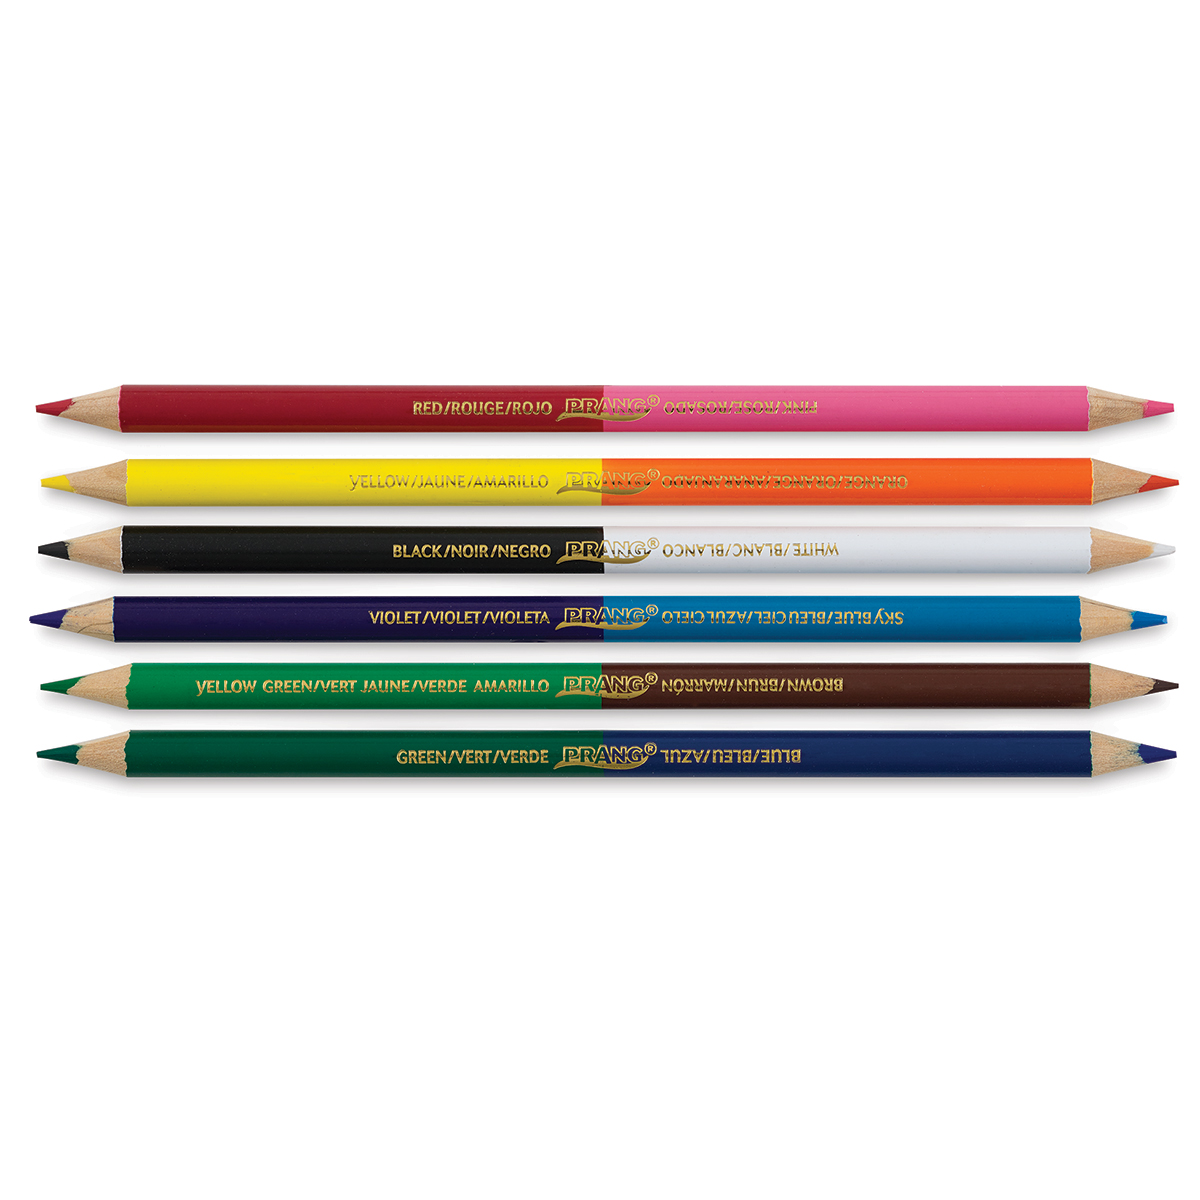 Prang Duo-Color Colored Pencil Sets, 3 mm, Assorted Colors, 18-Set